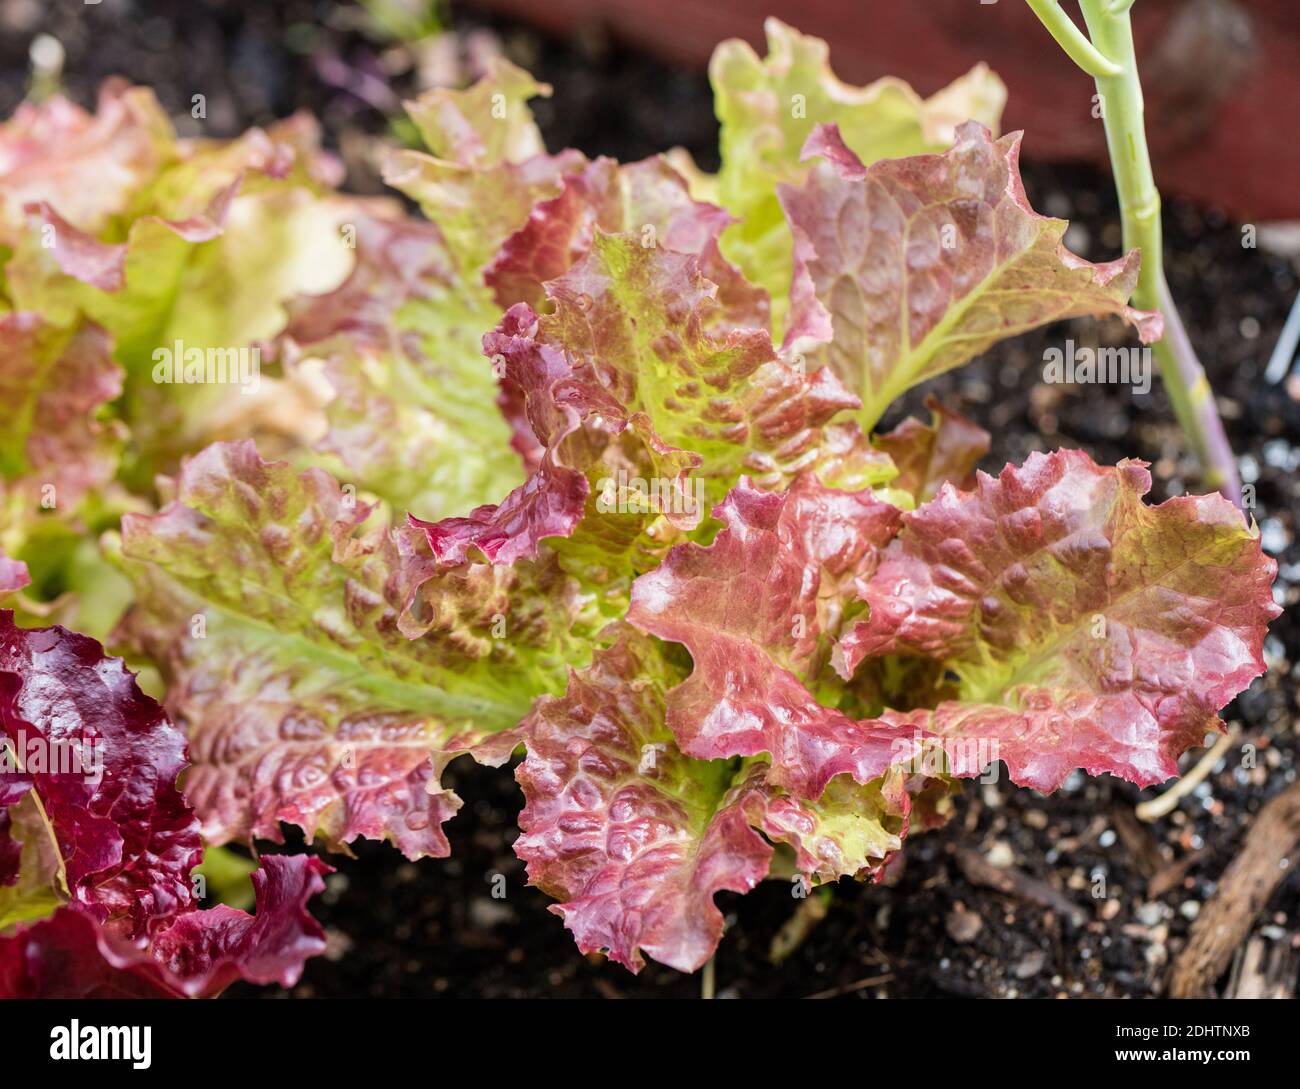 'Amerikanischer Braune' Lettuce, Sallat (Lactuca sativa) Stock Photo